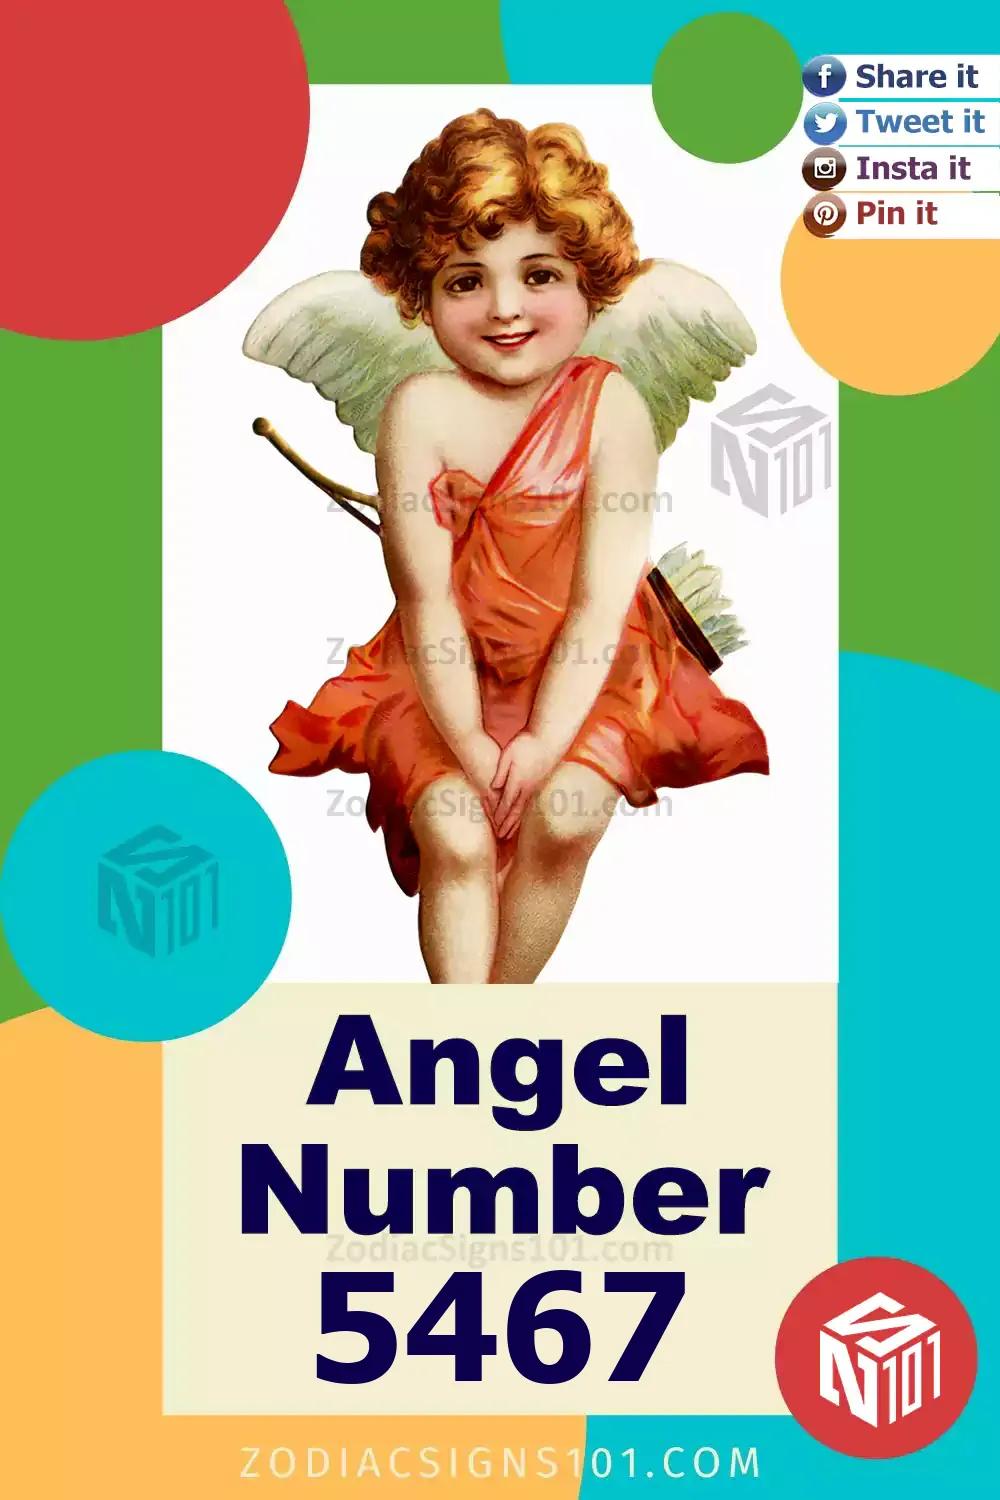 5467-Angel-Number-Meaning.jpg